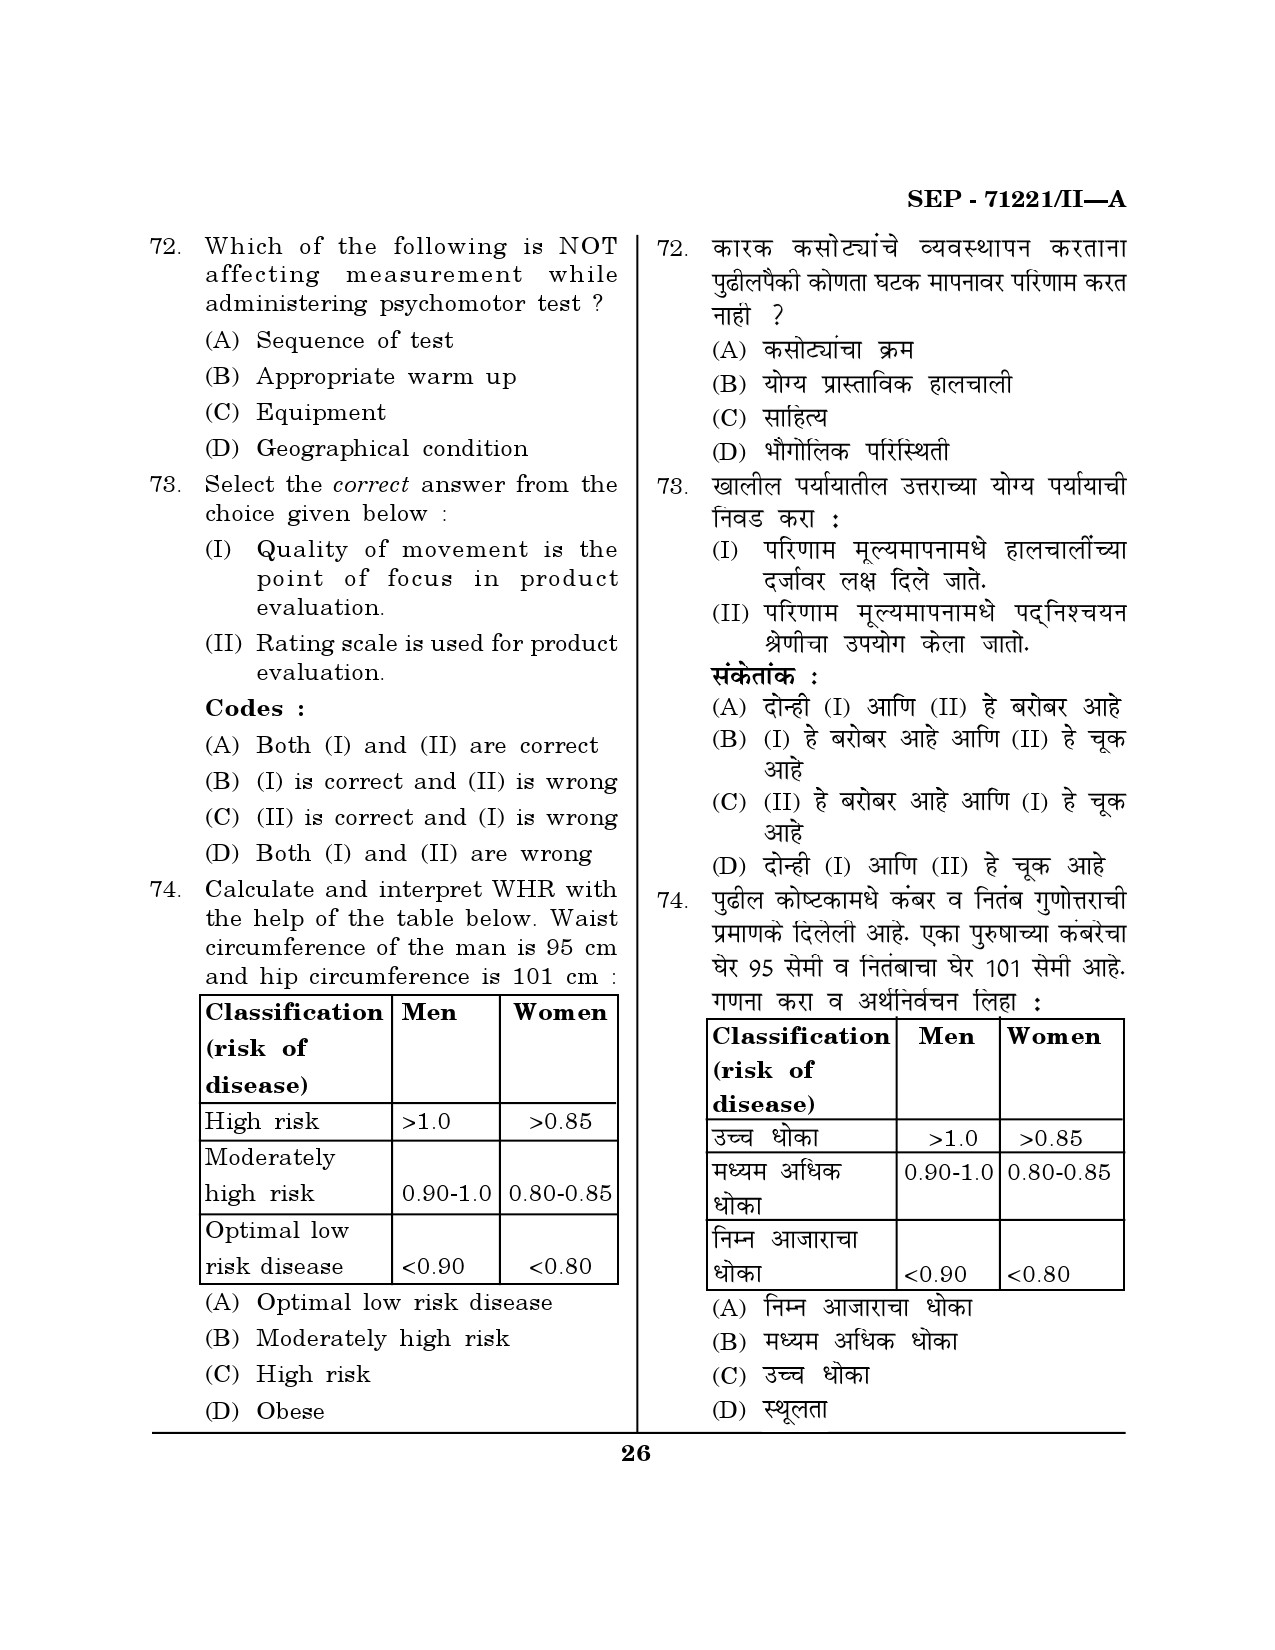 Maharashtra SET Physical Education Exam Question Paper September 2021 25